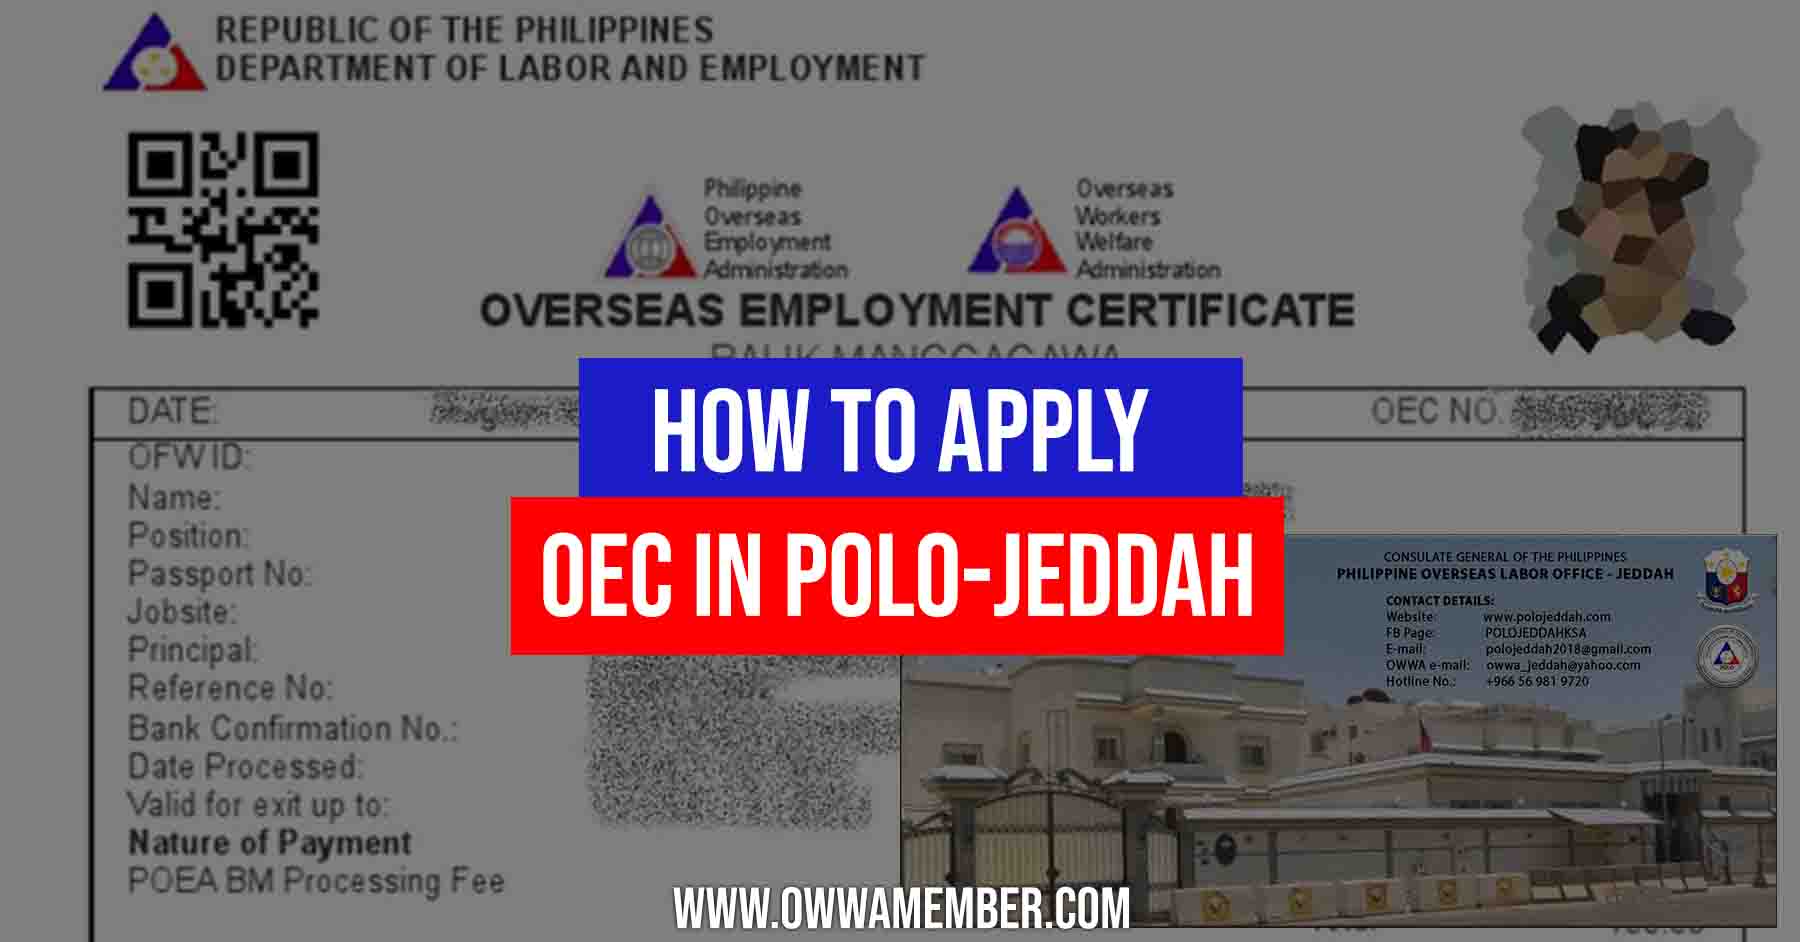 how to apply for oec balik manggagawa jeddah